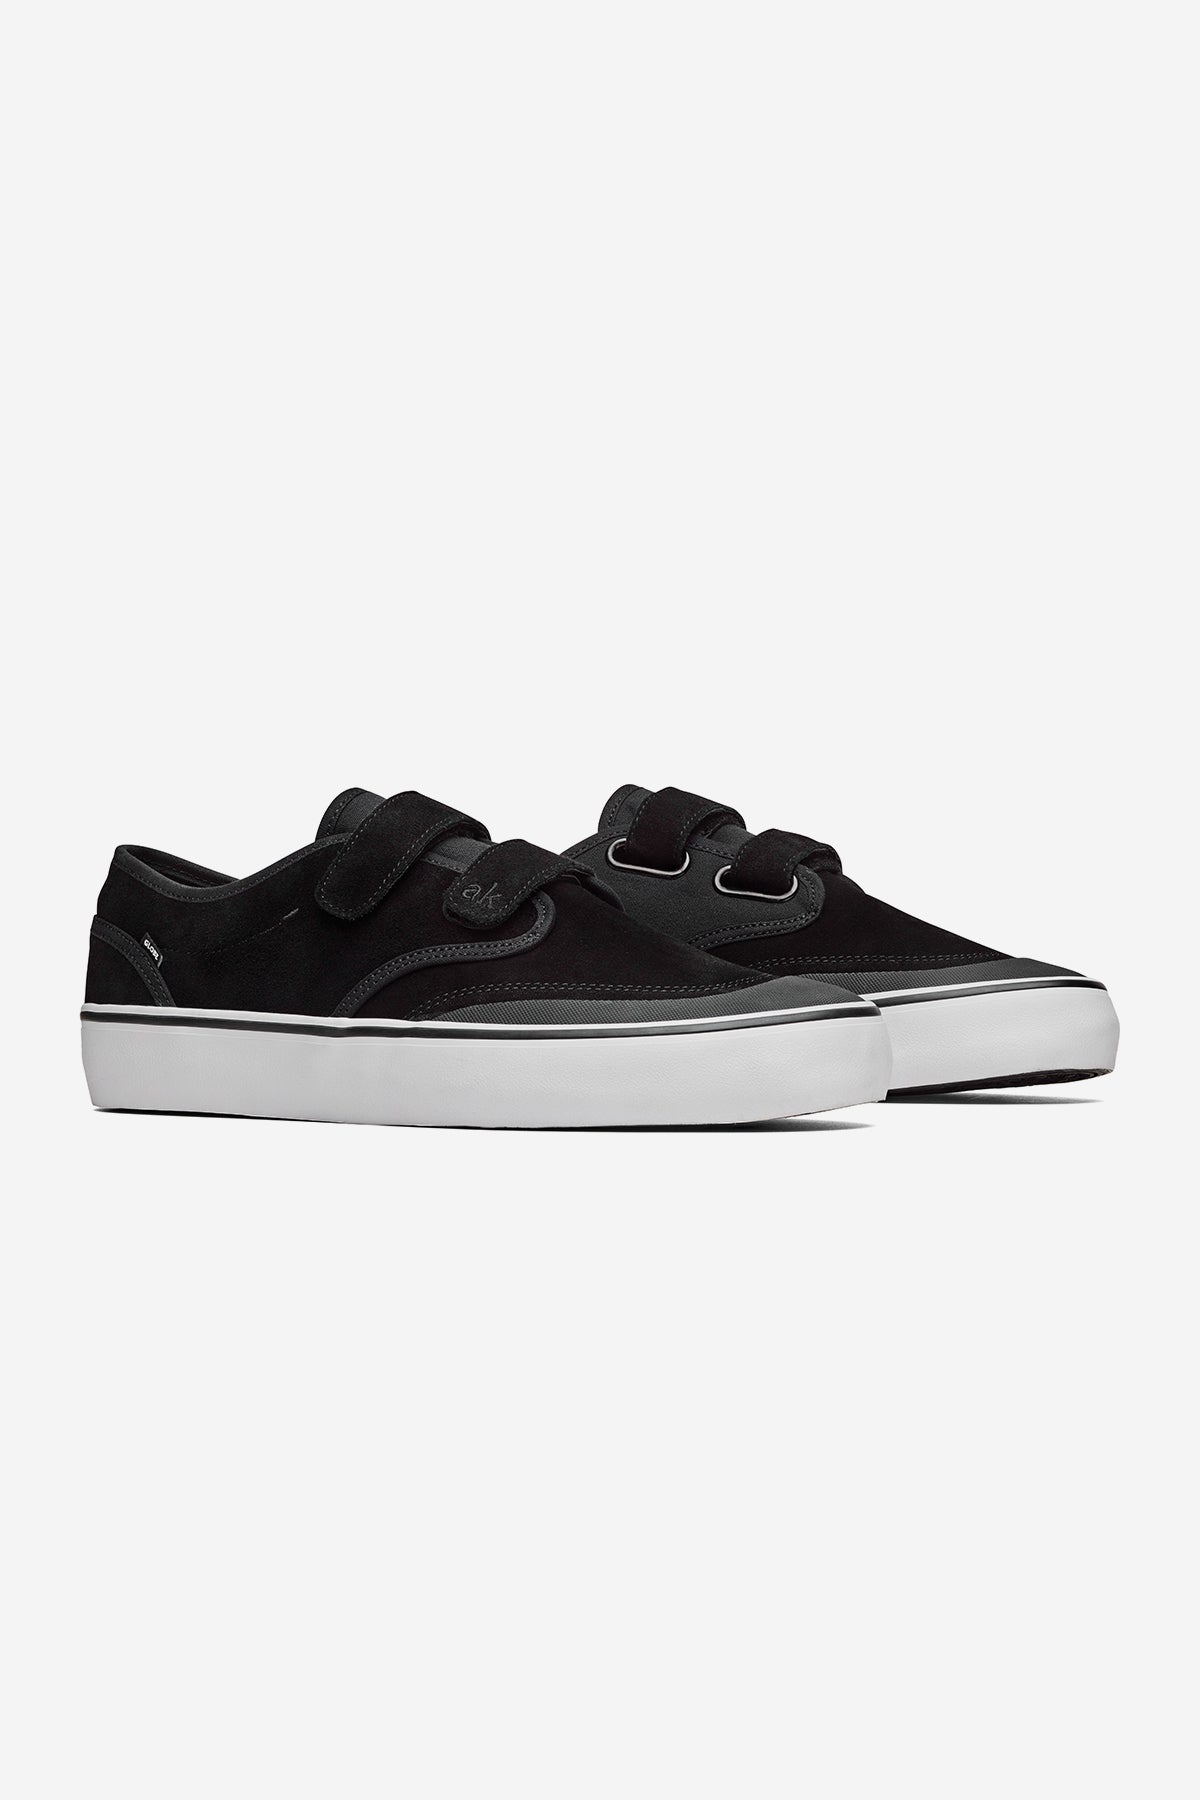 motley ii strap noir white skateboard  chaussures